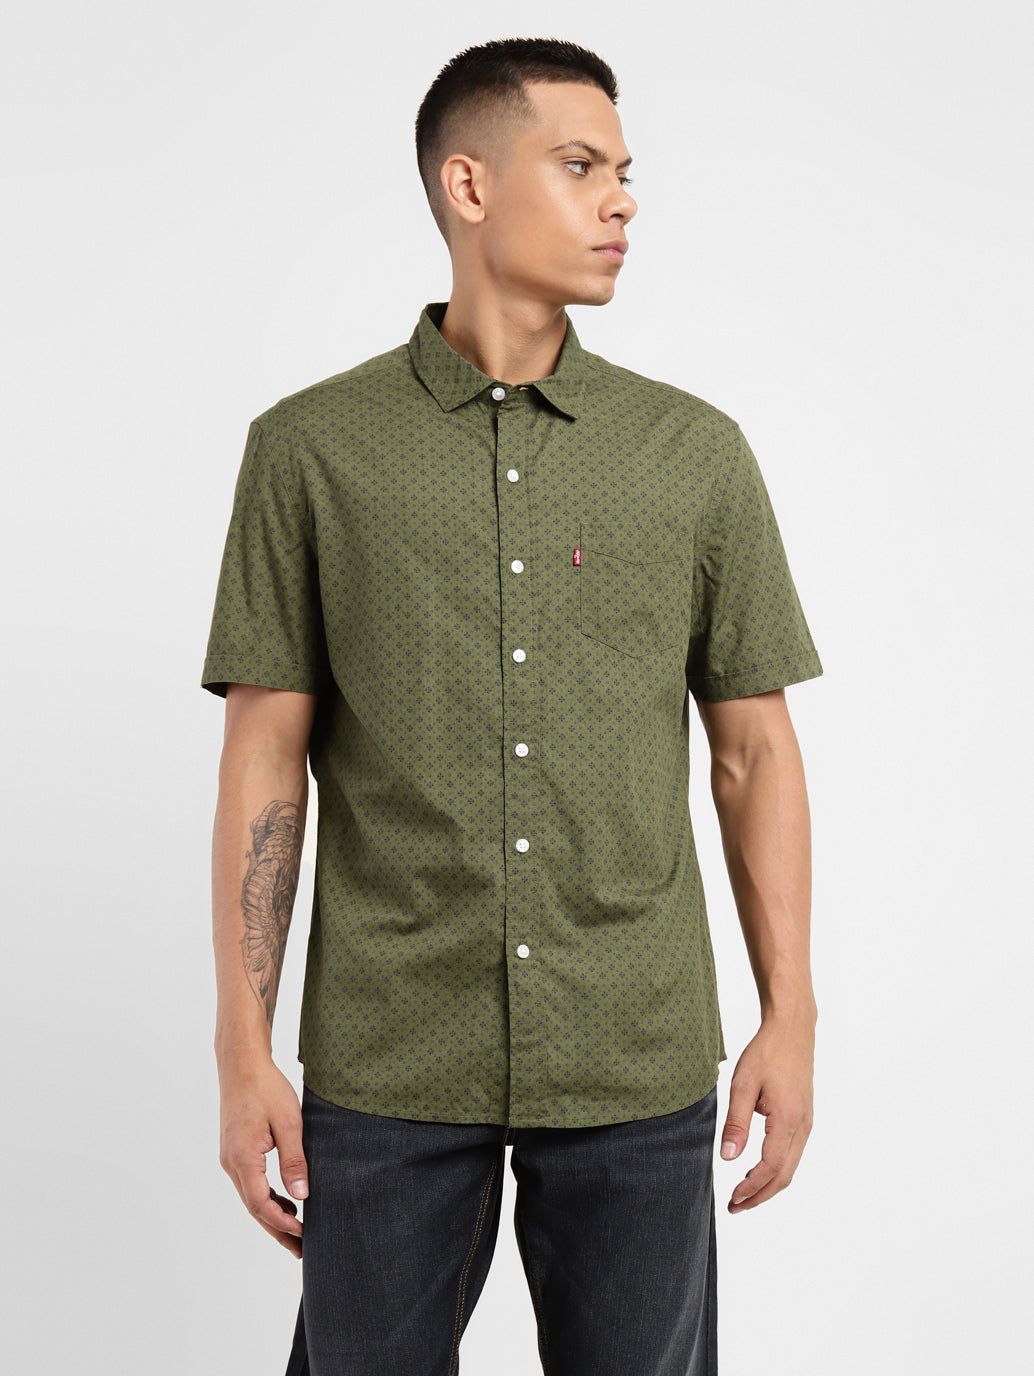 Men's Geometric Print Slim Fit Shirt